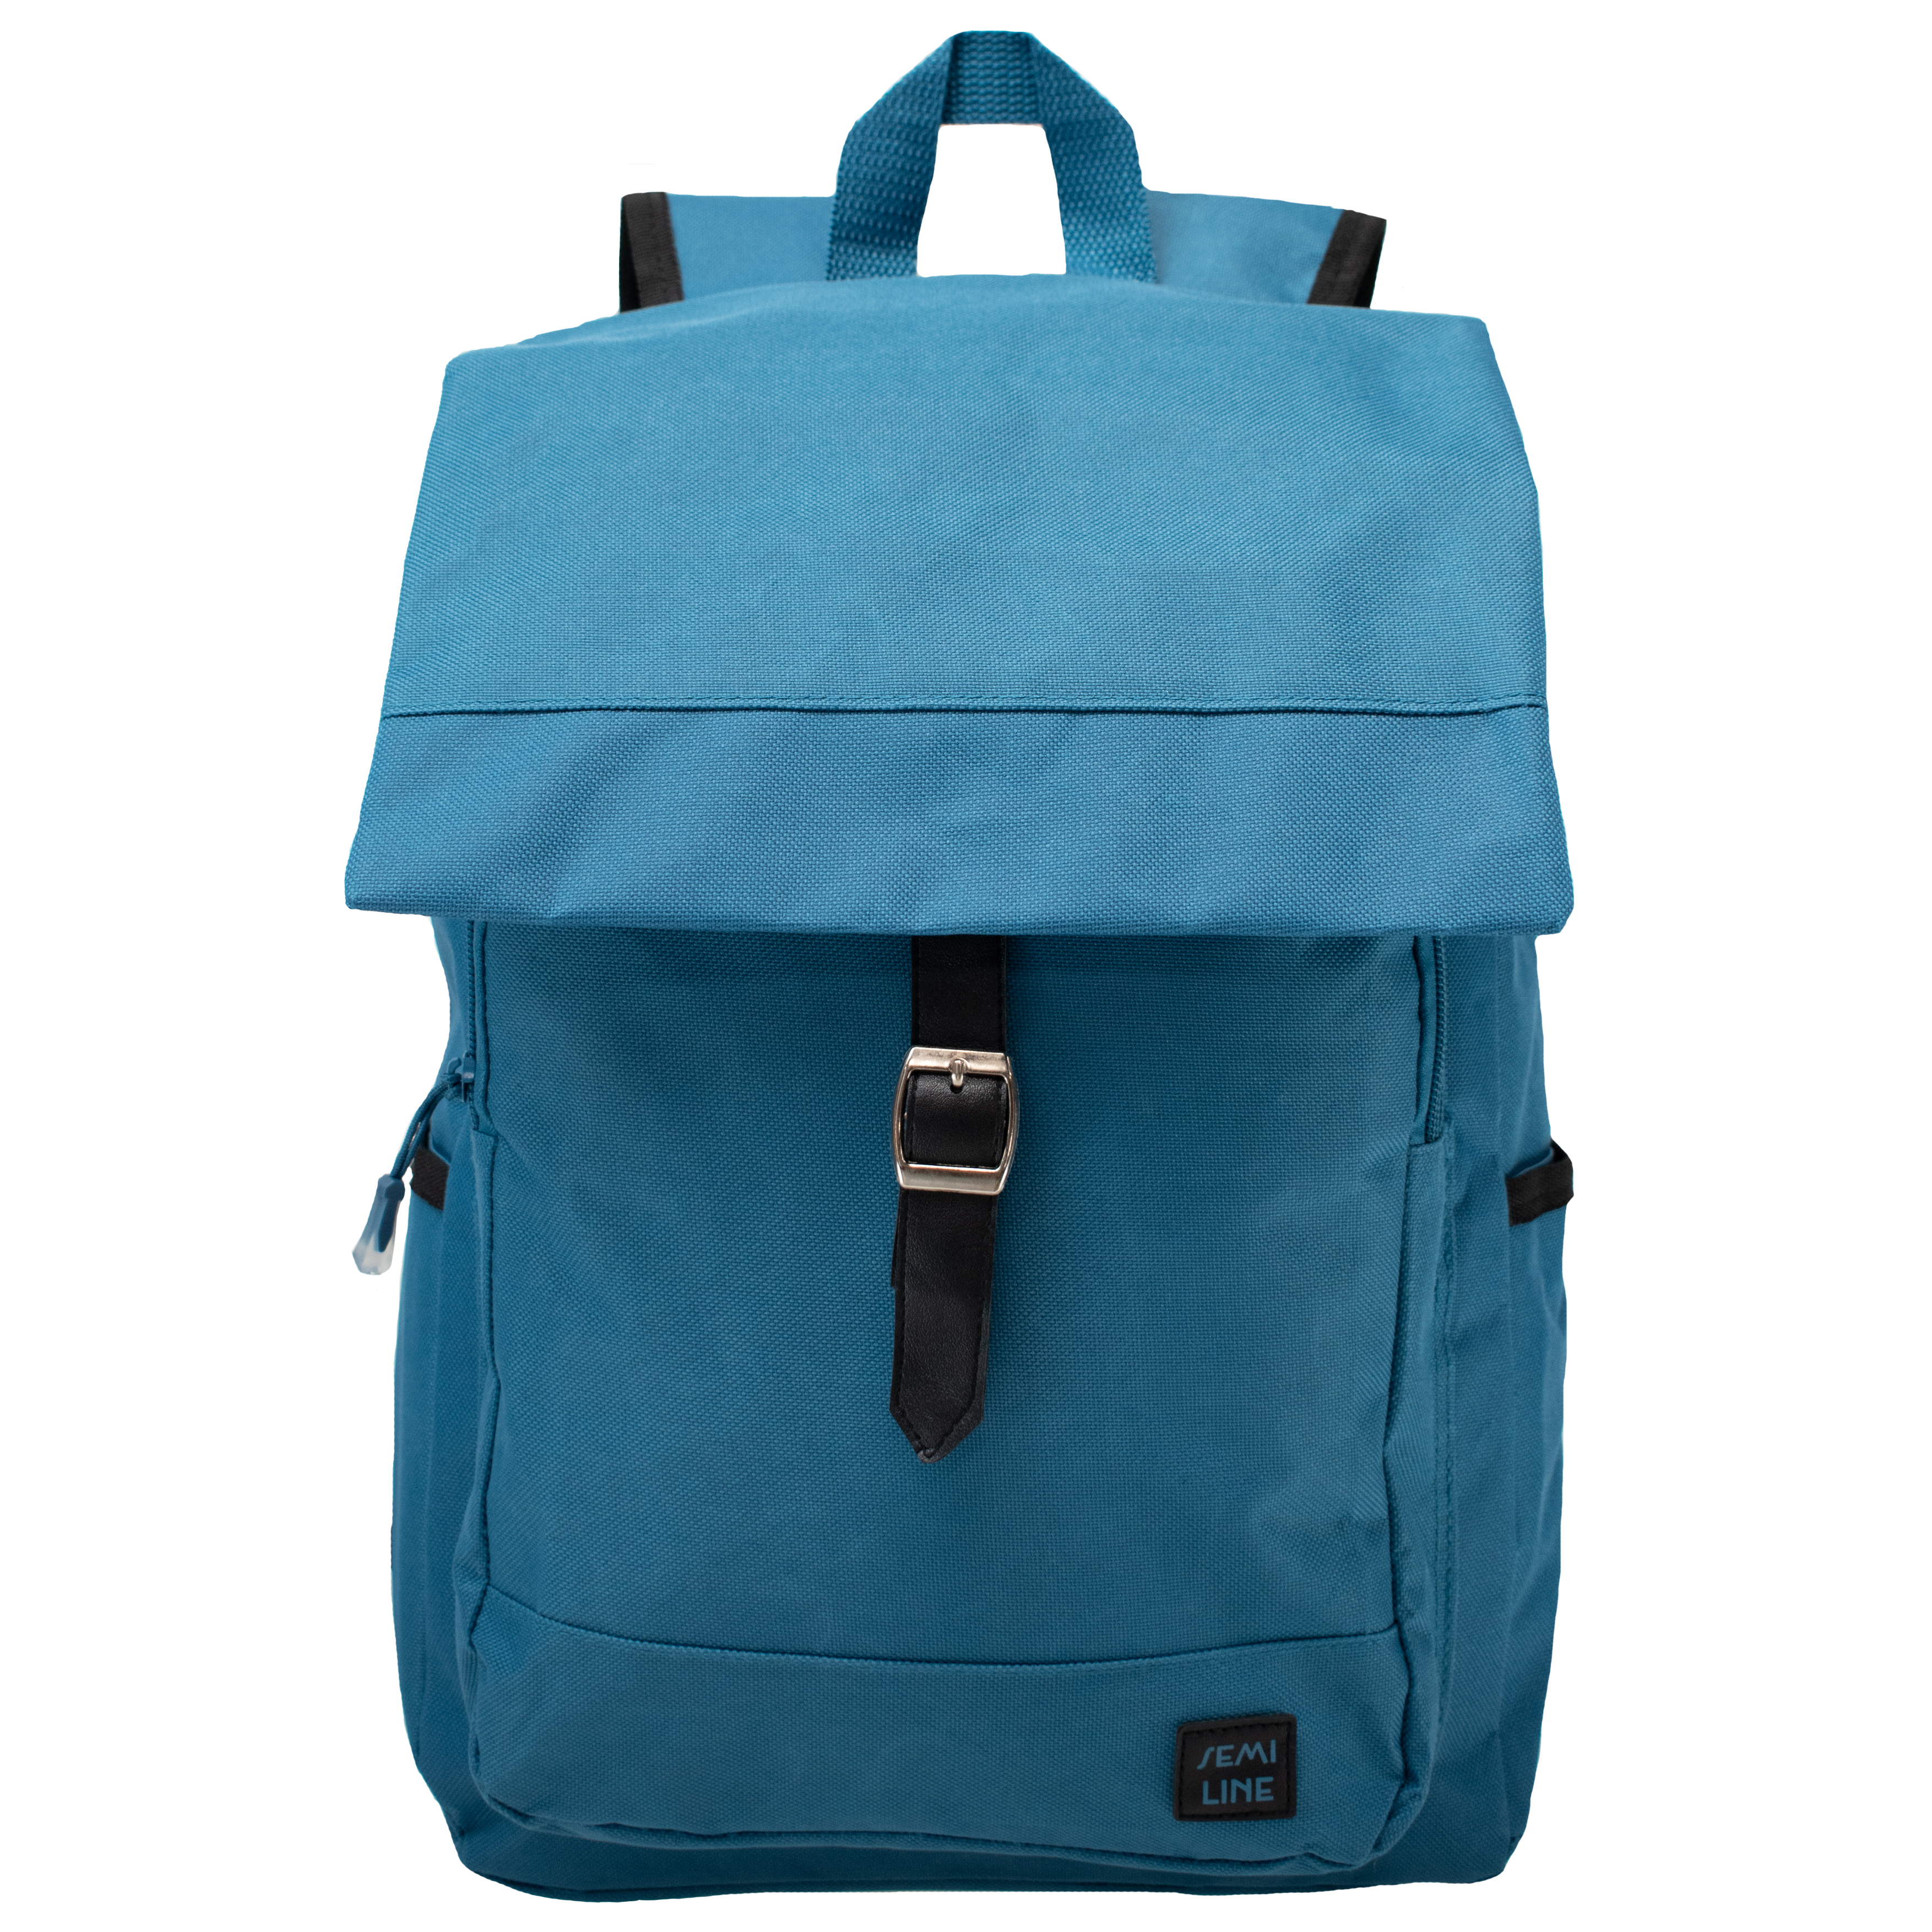 Semiline Unisex's Backpack J4921-2